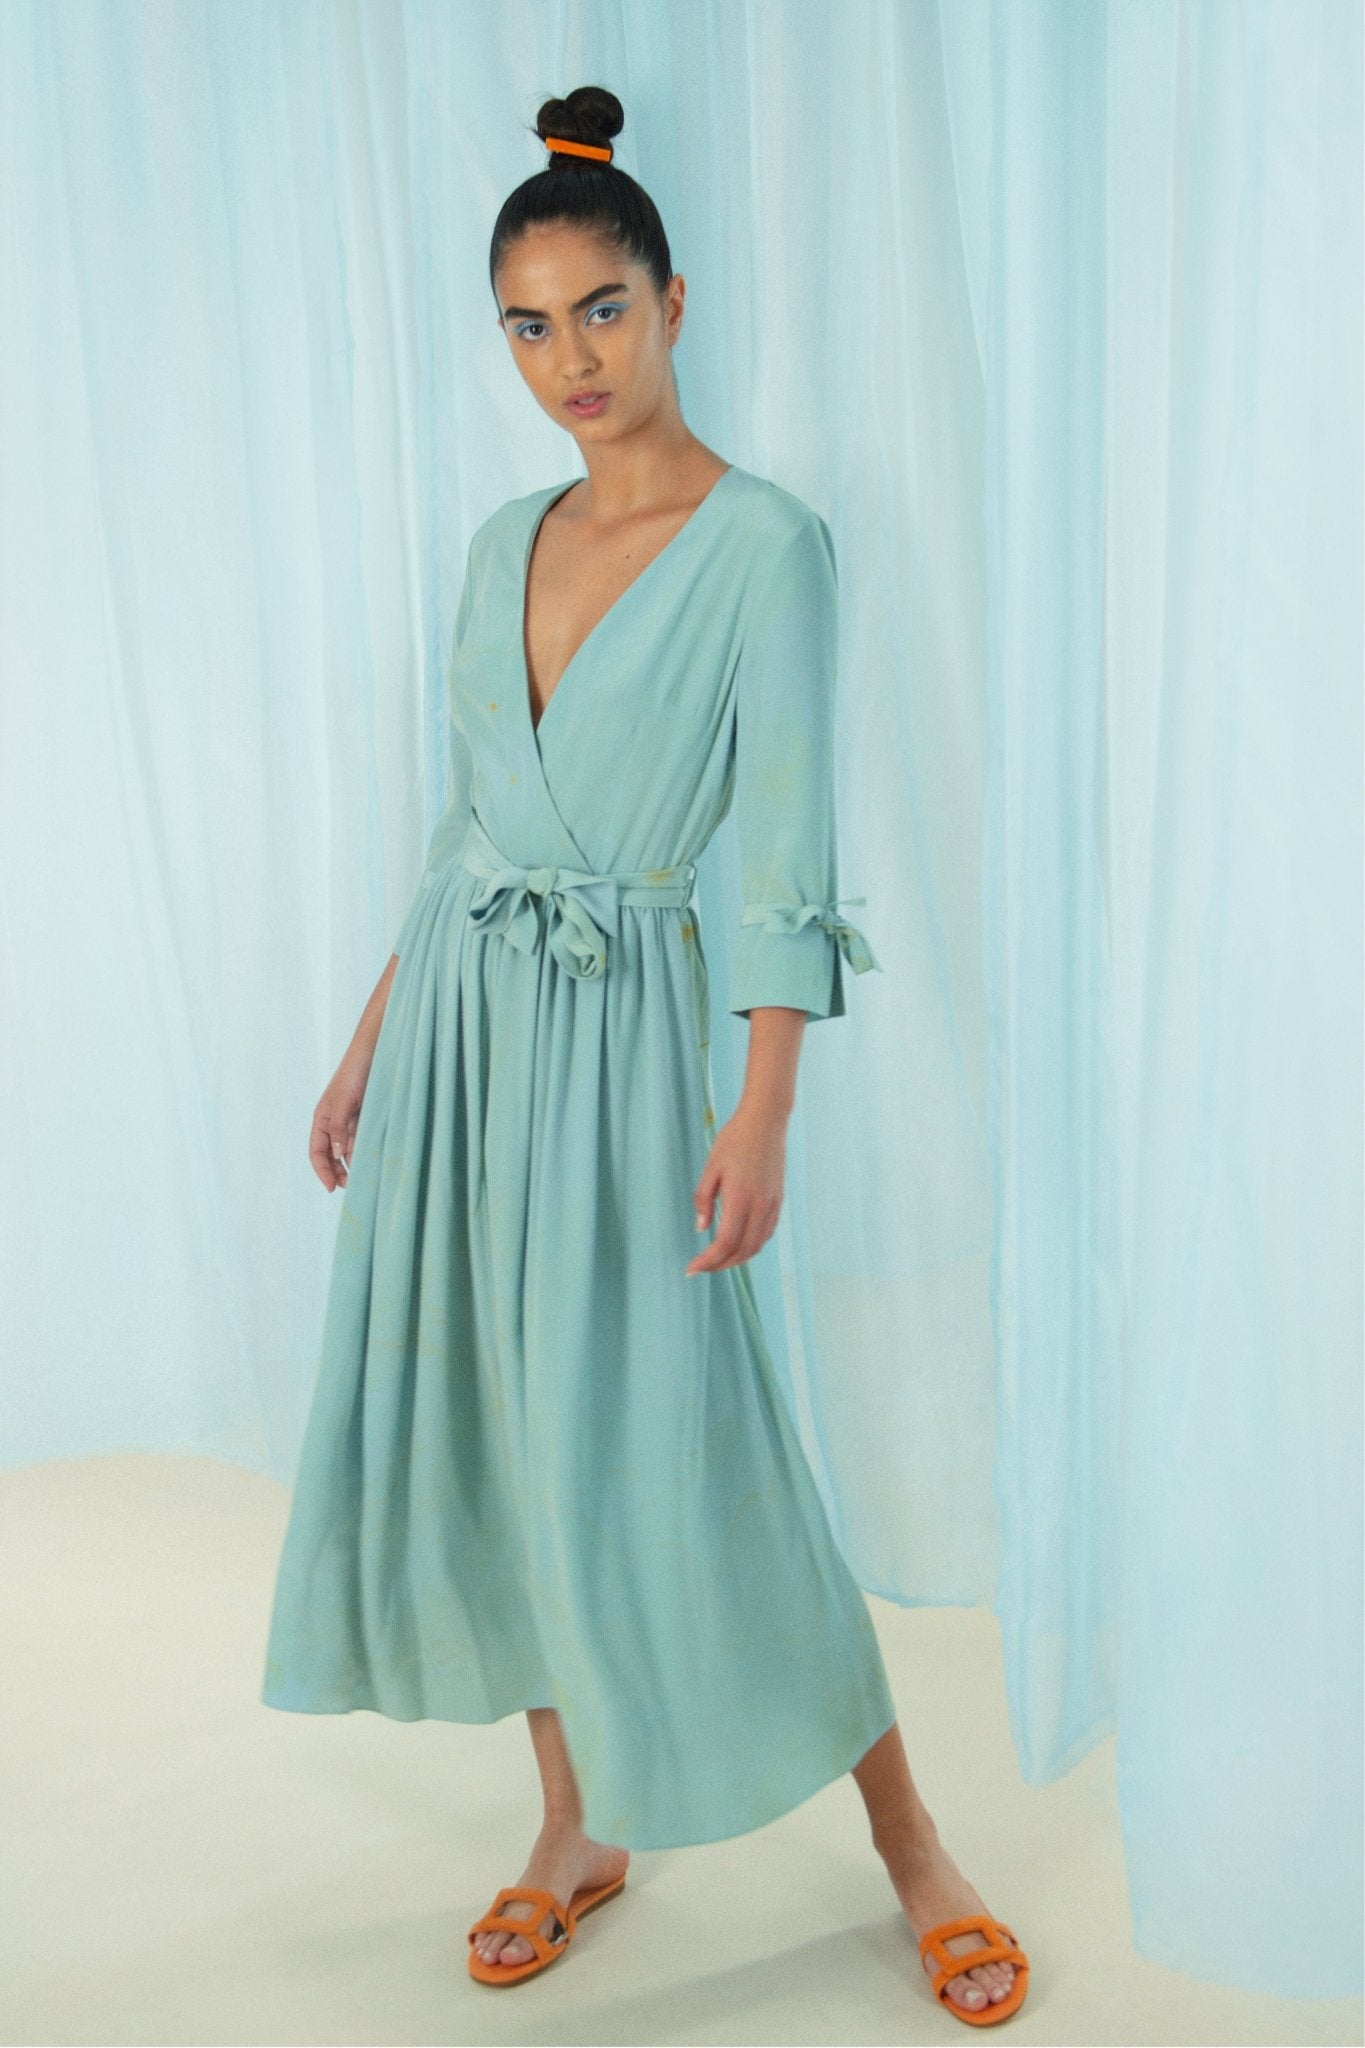 Duck Egg Blue Hand Marbled Silk Wrap Dress - Edward Mongzar - The Clothing LoungeEdward Mongzar